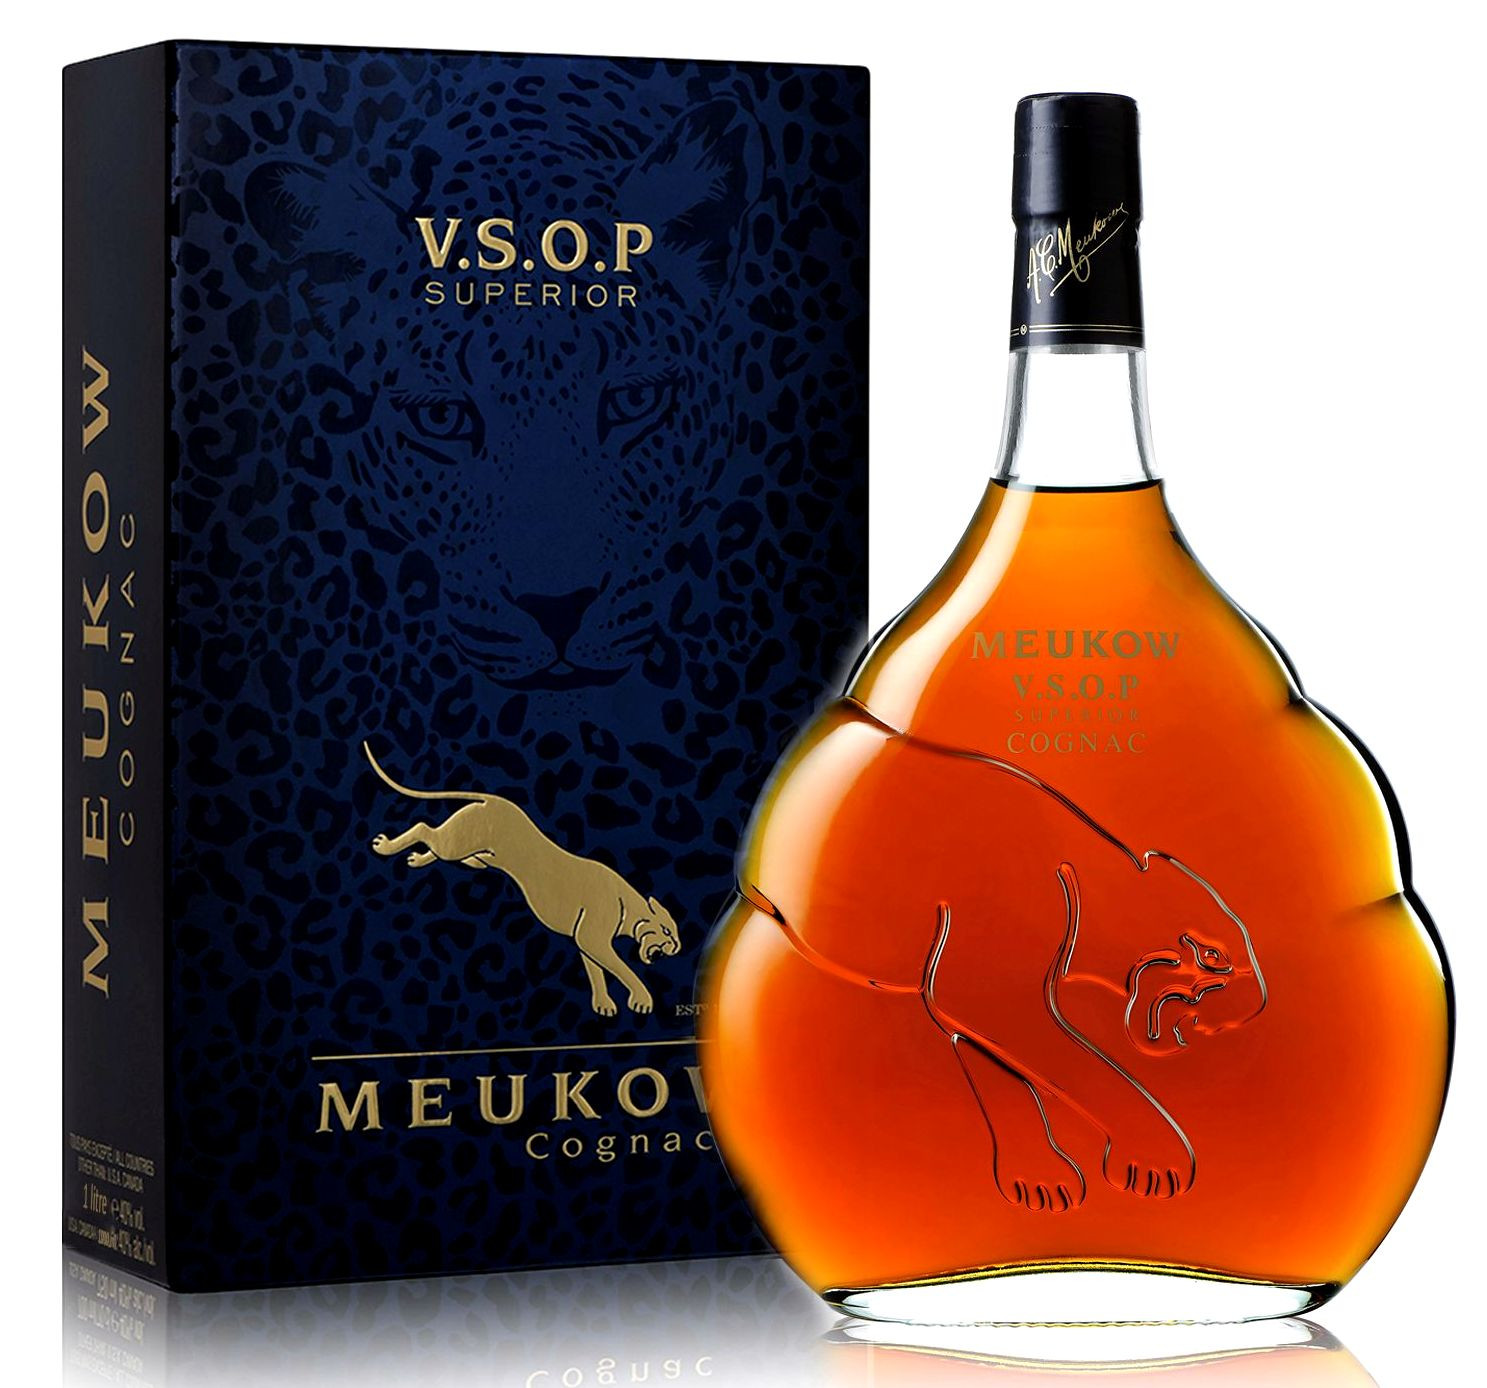 Meukow VSOP Cognac 0,7l